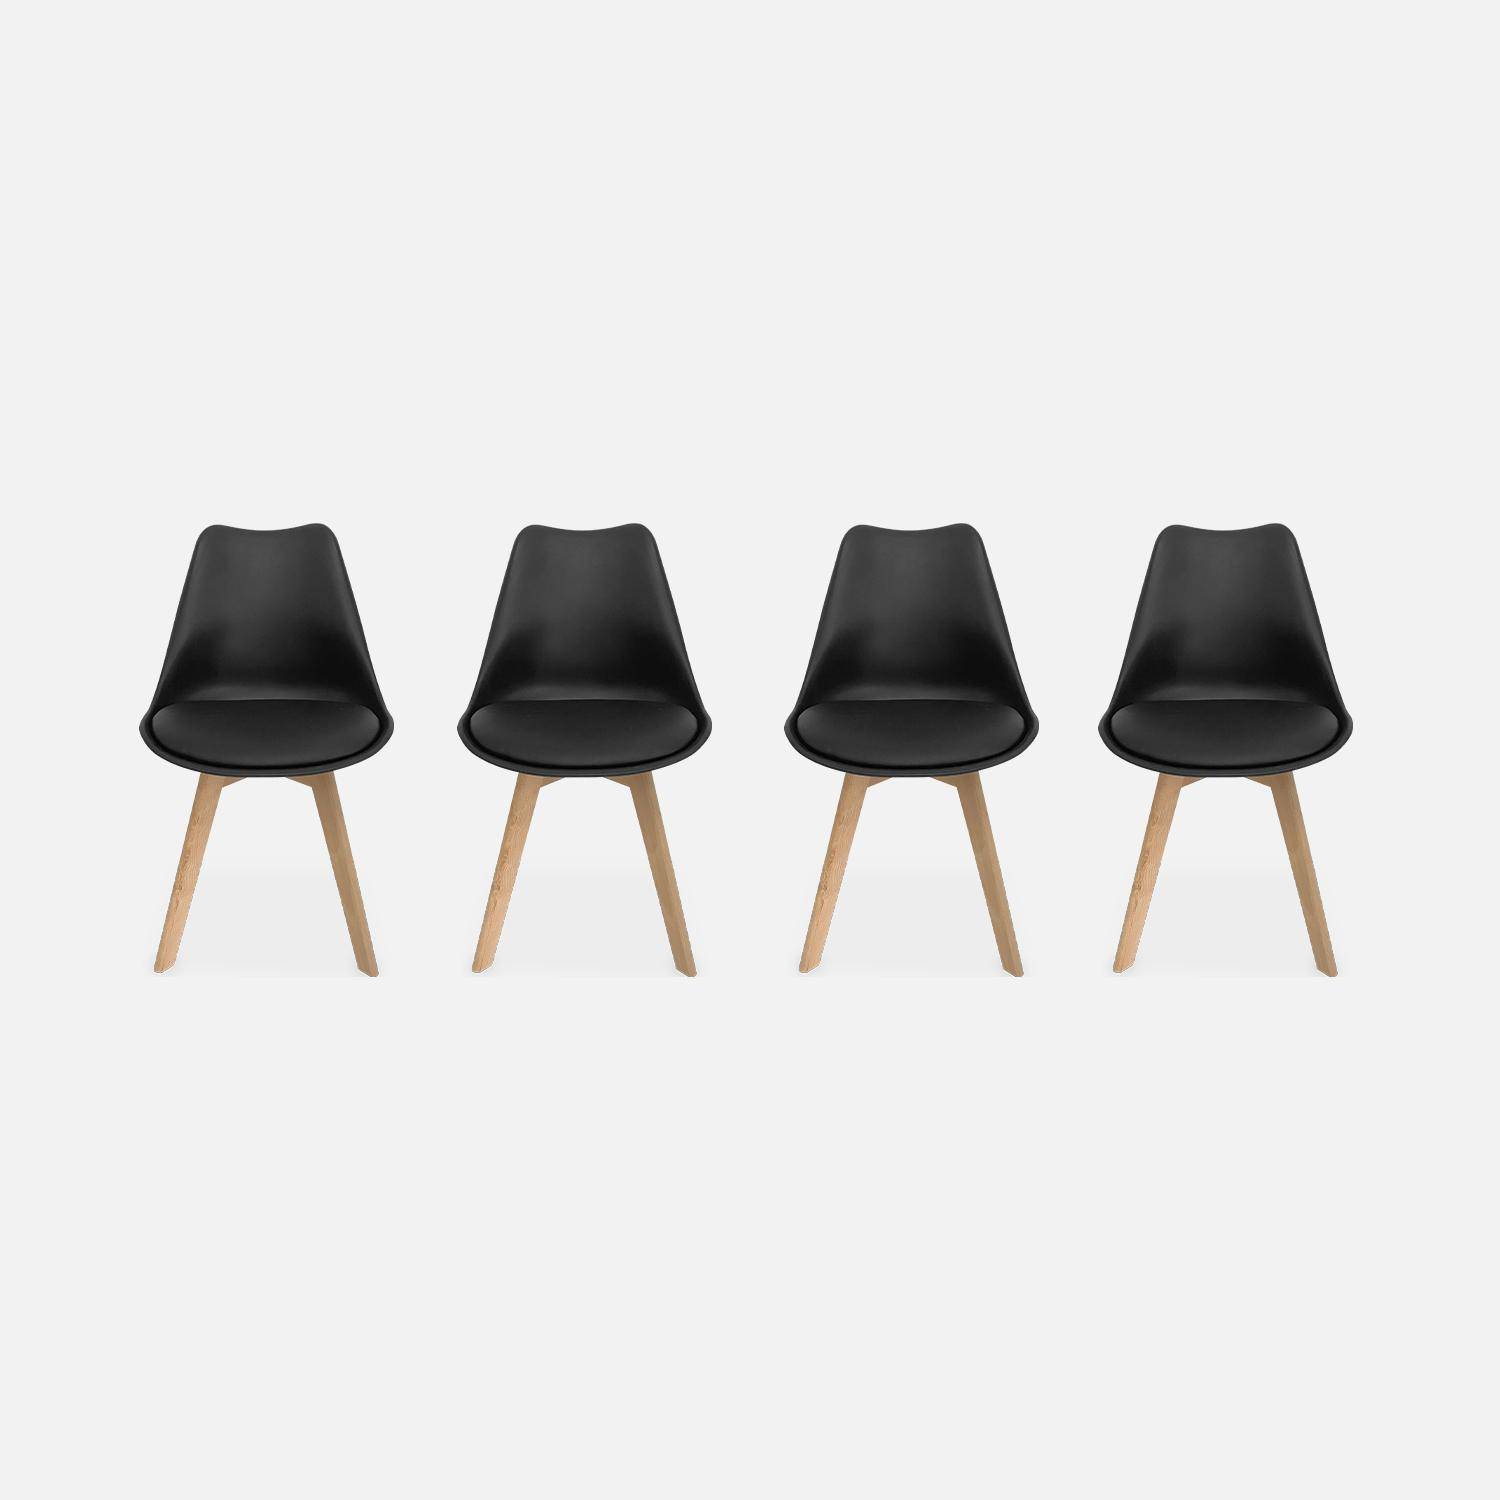 Set of 4 Scandinavian chairs, beechwood legs, 1-seater chair, black,sweeek,Photo4